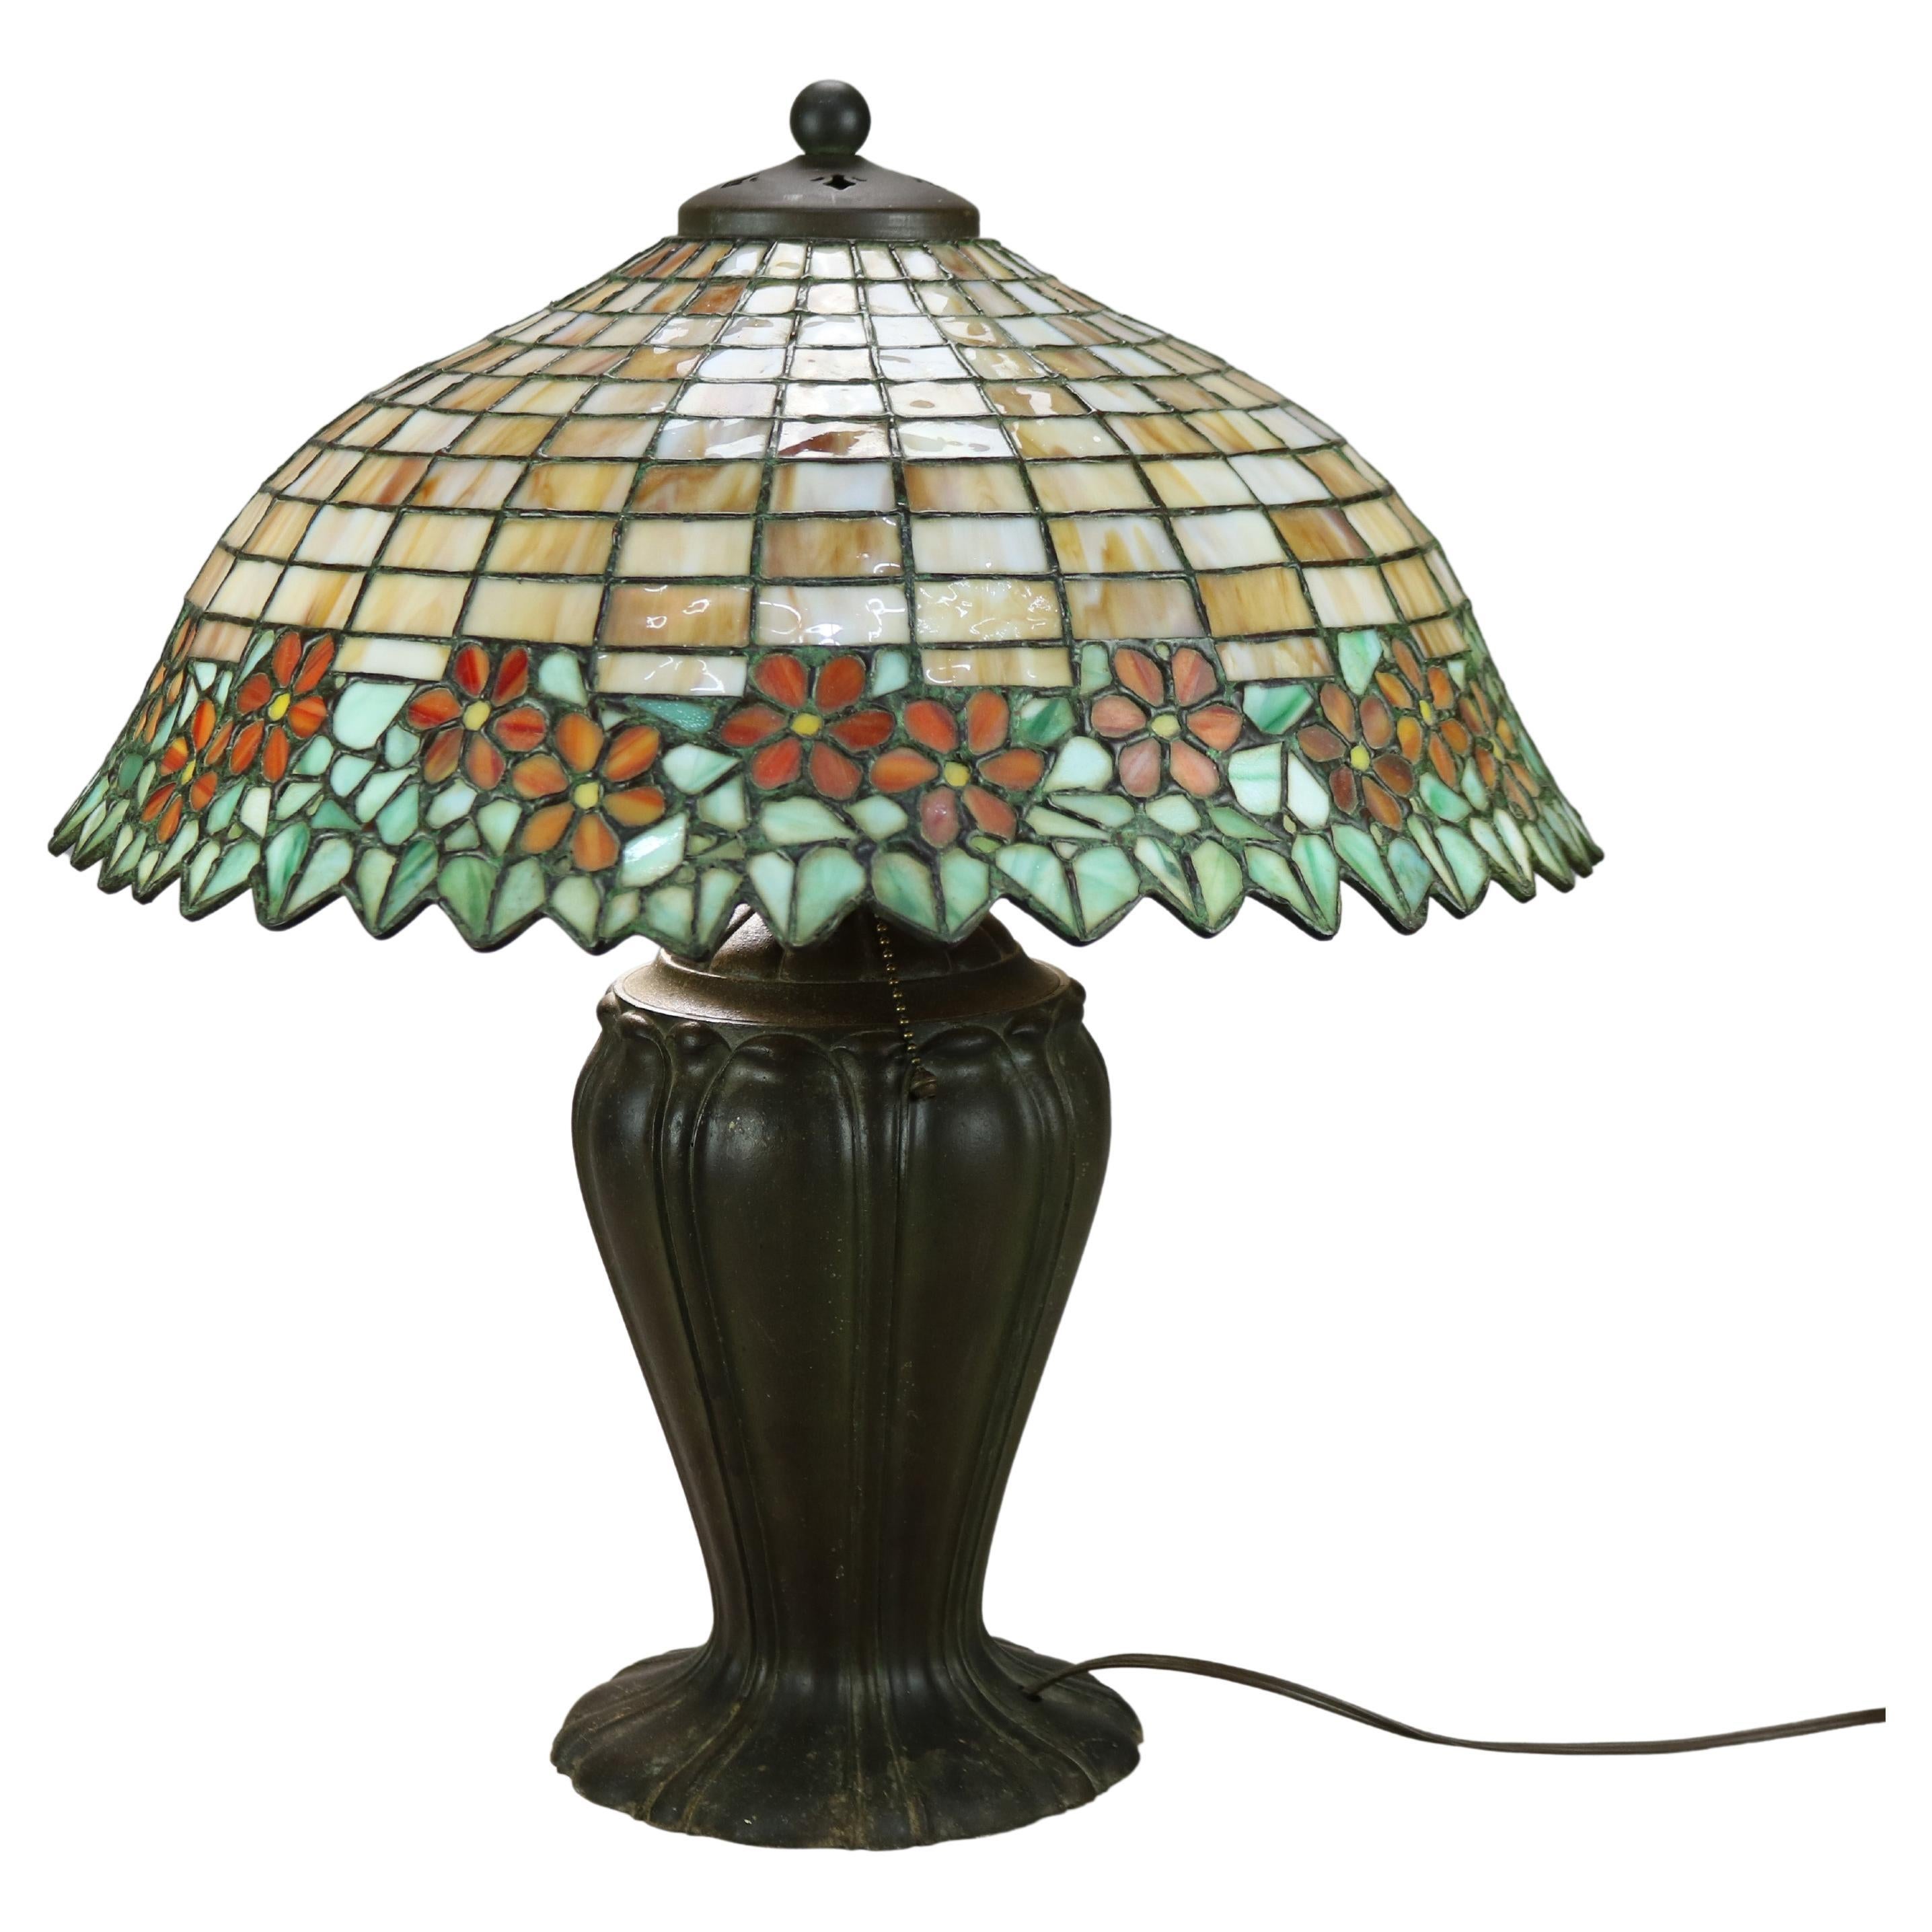 Antique Arts & Crafts Leaded Glass Table Lamp, Attr. Unique & Handel, circa 1920